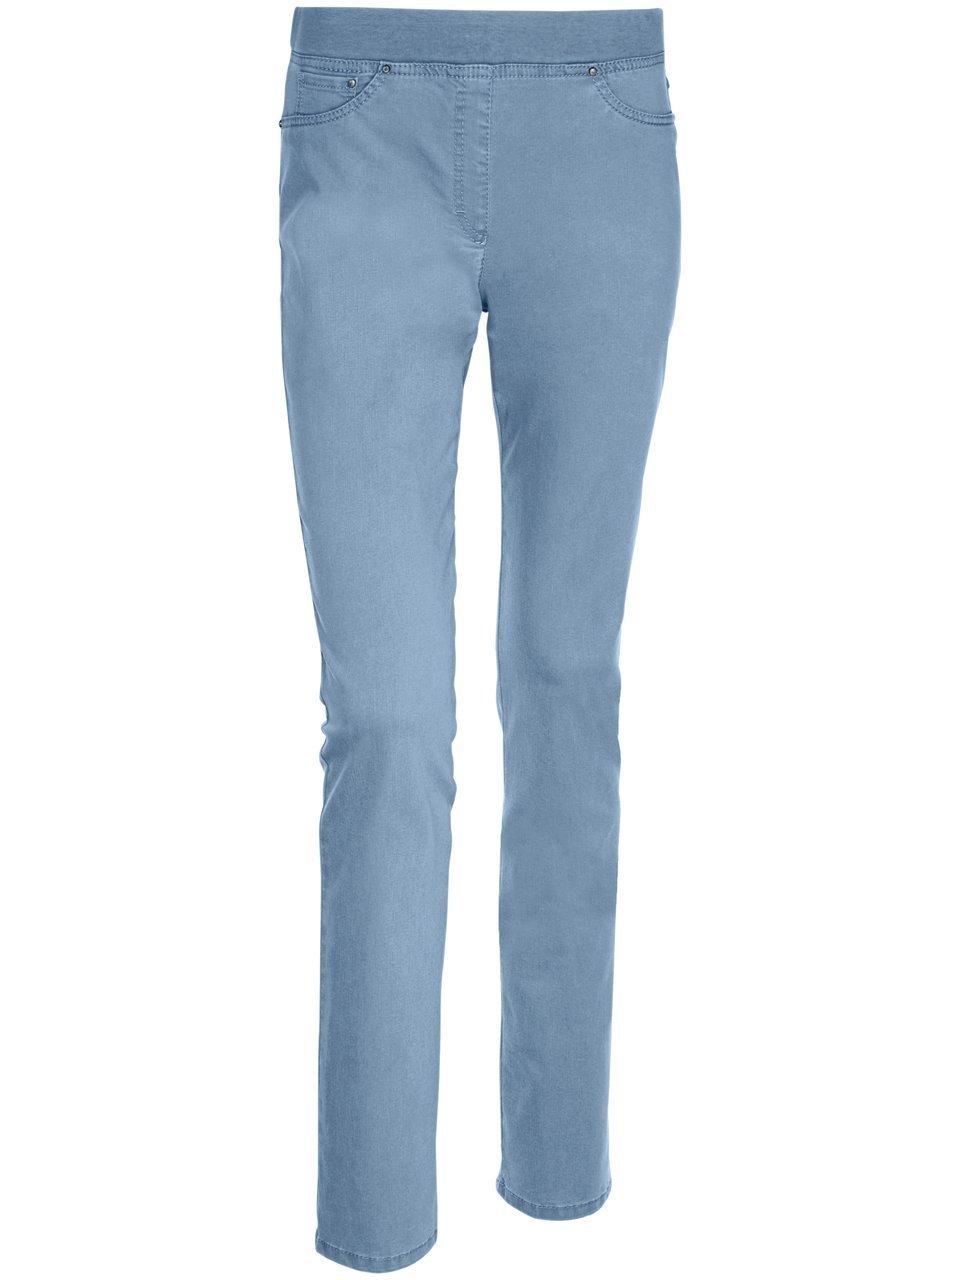 Comfort Plus-jeans model Carina Van Raphaela by Brax denim